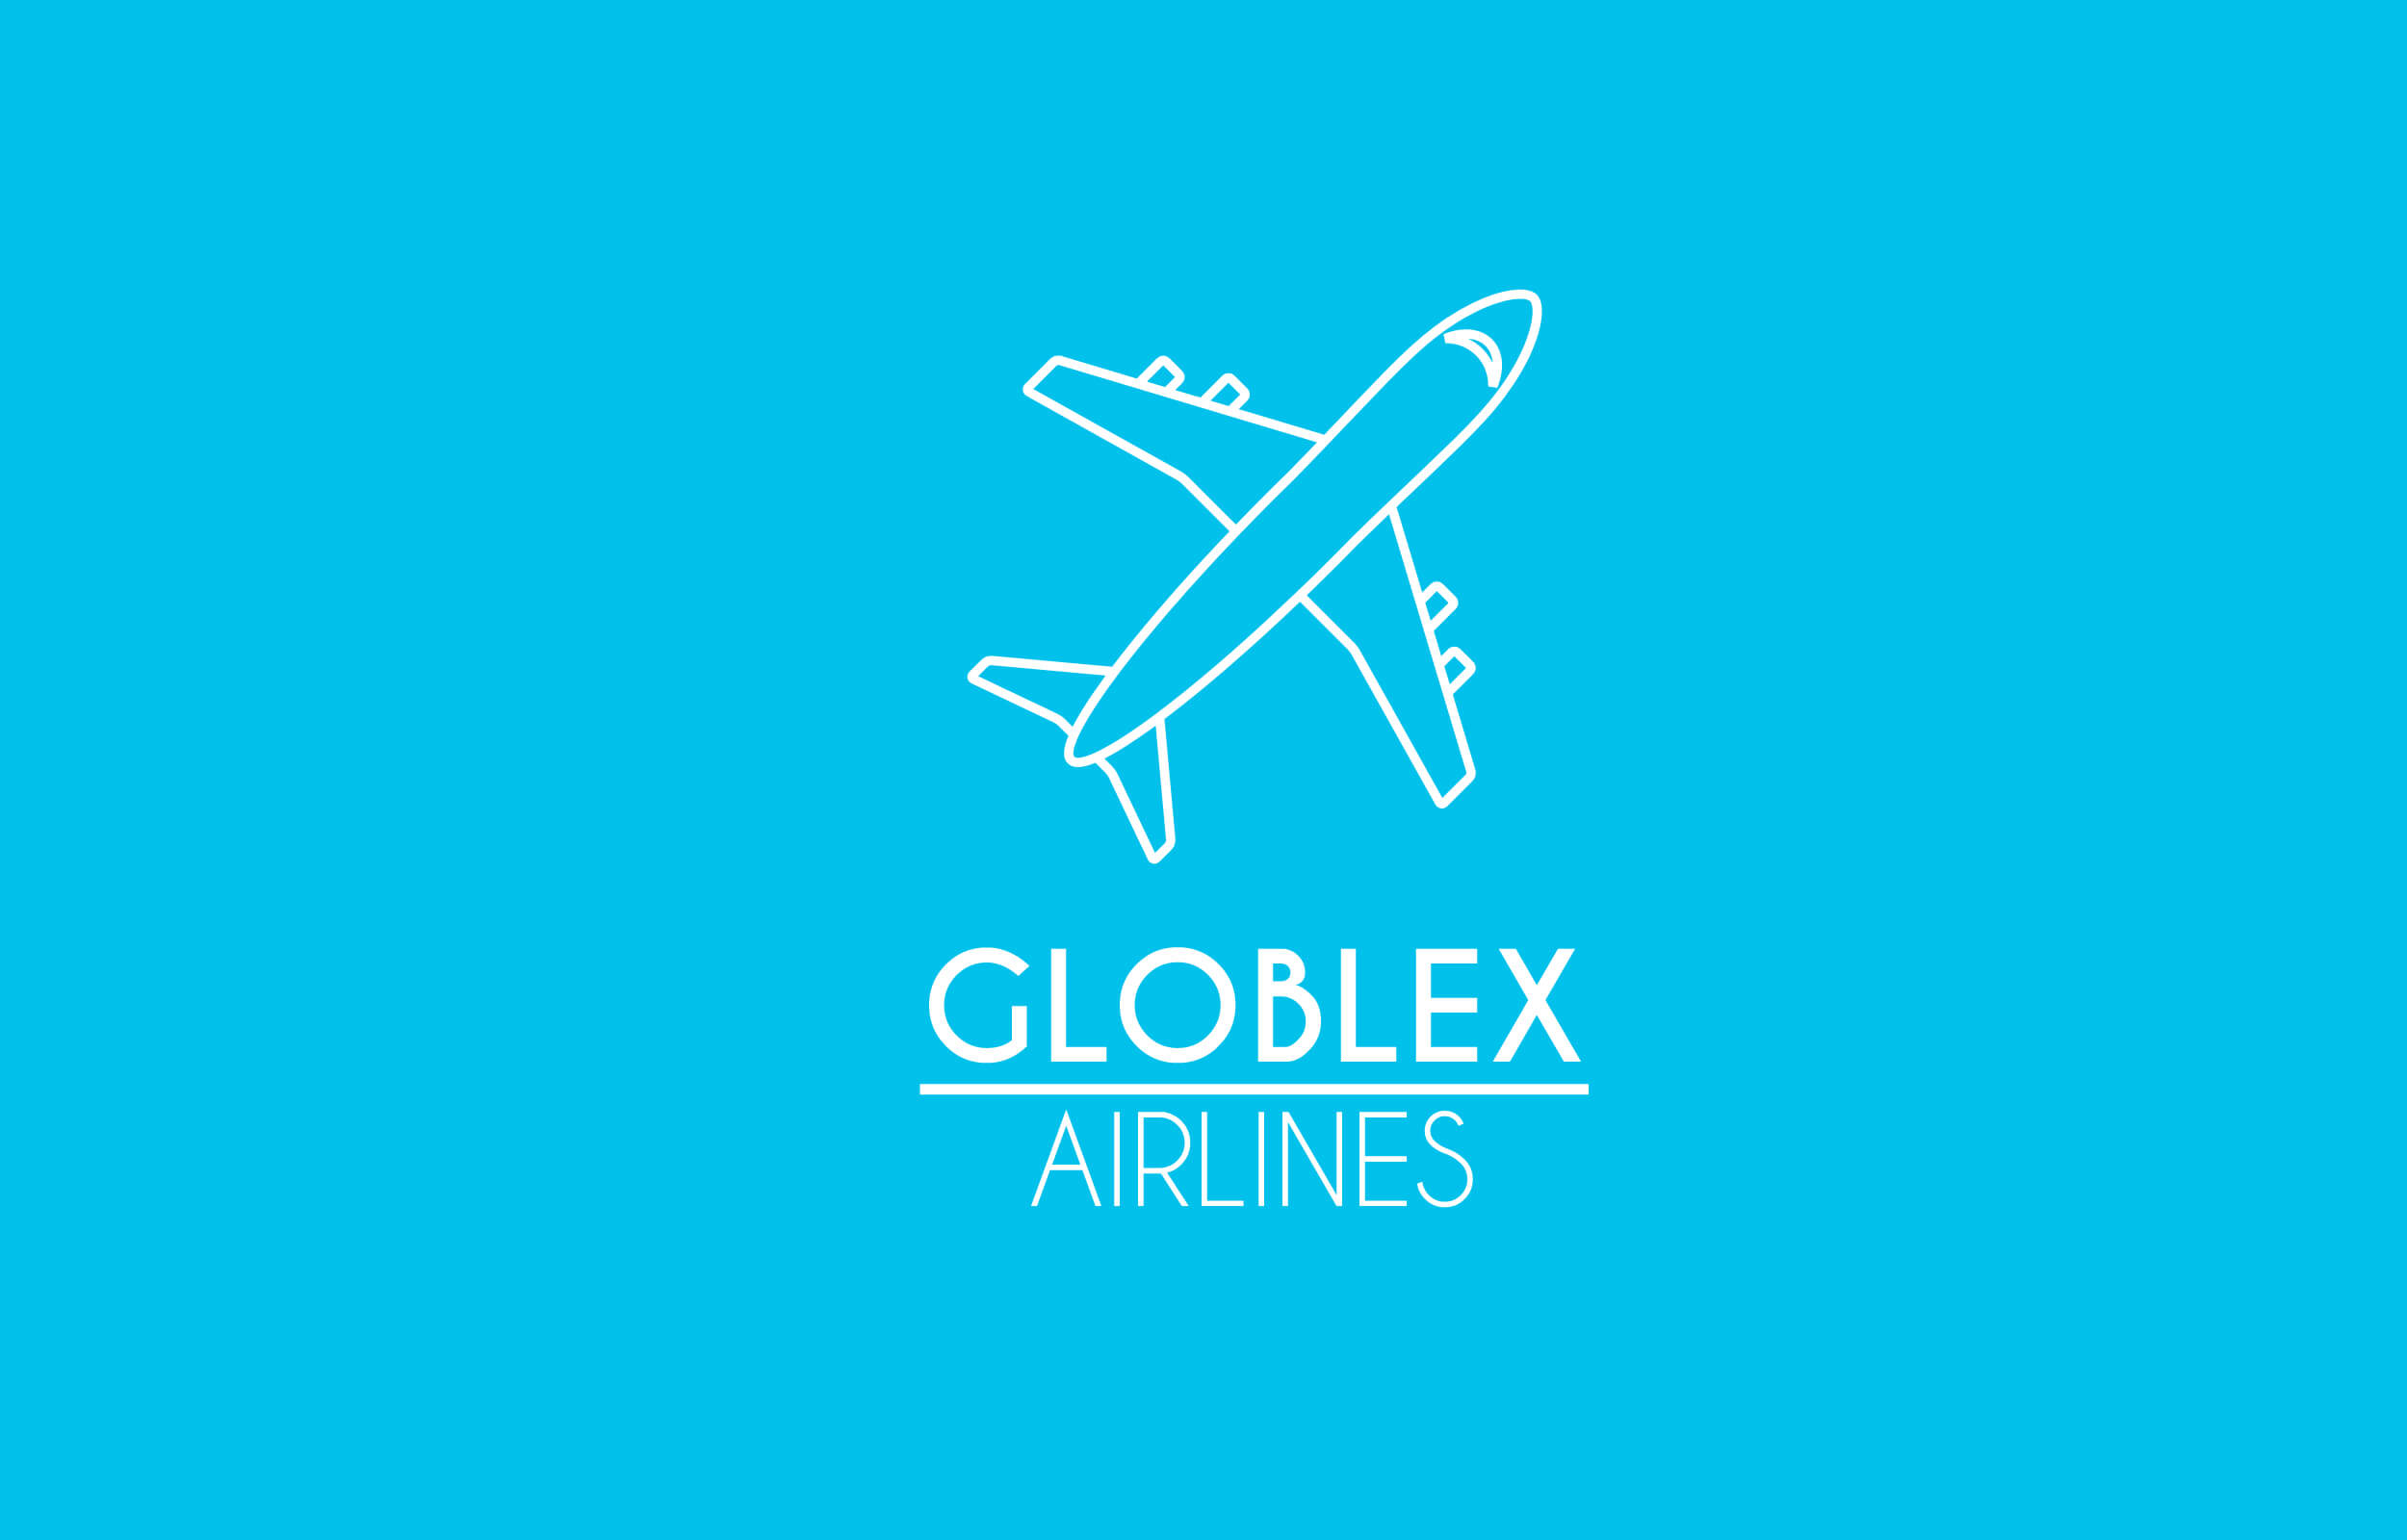 Globlex Airlines